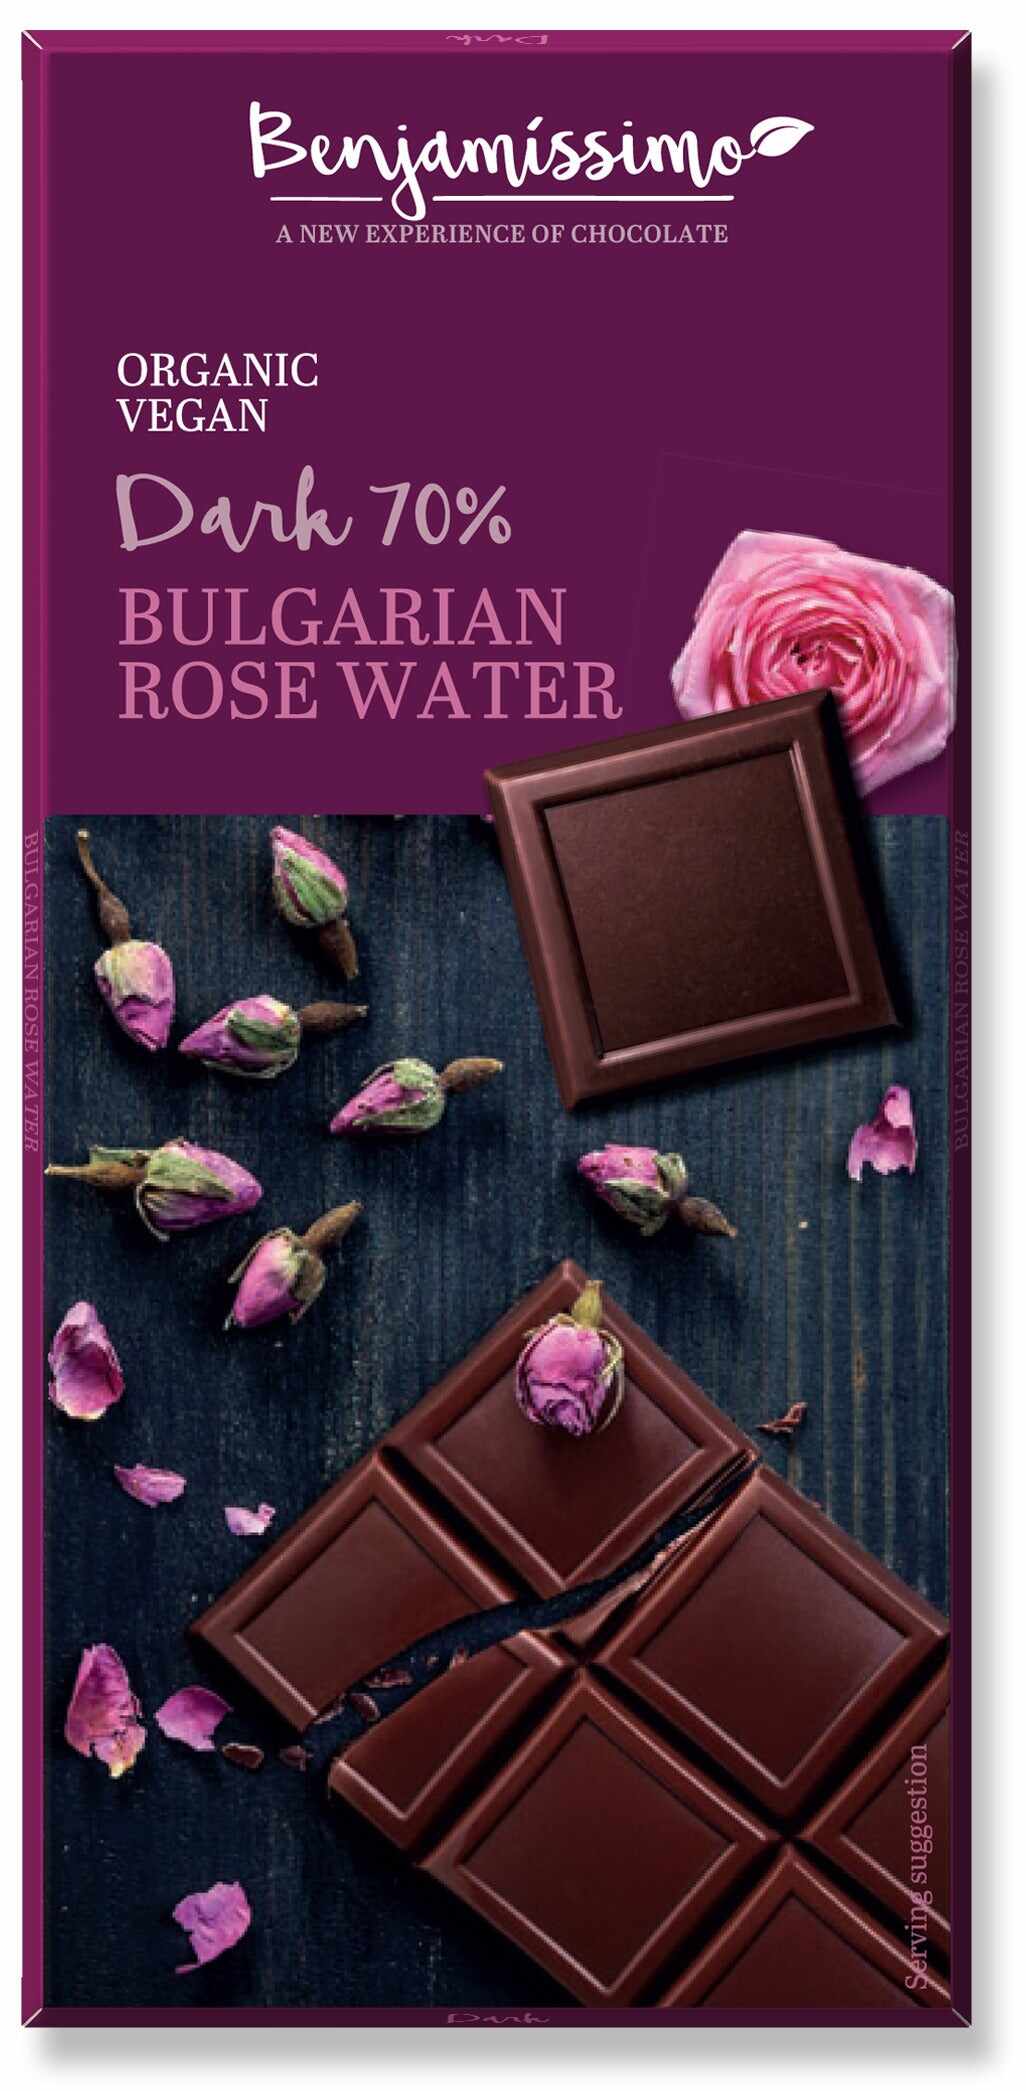 Ciocolata cu apa de trandafir, bio, 70g, benjamissimo